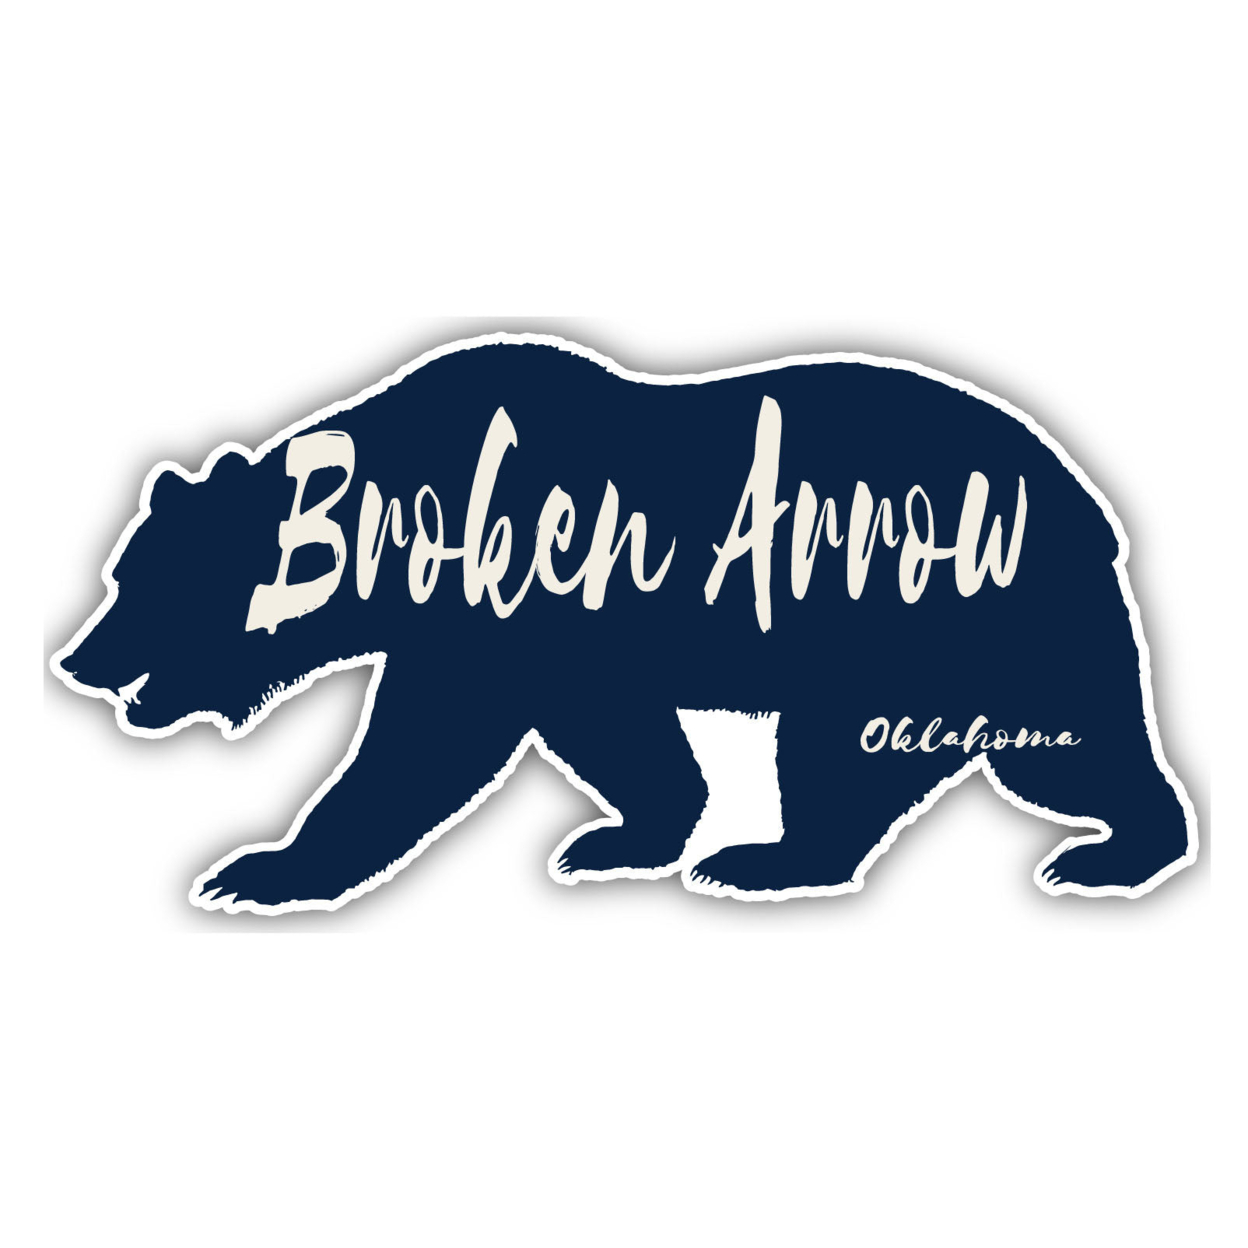 Broken Arrow Oklahoma Souvenir Decorative Stickers (Choose Theme And Size) - 4-Pack, 4-Inch, Bear